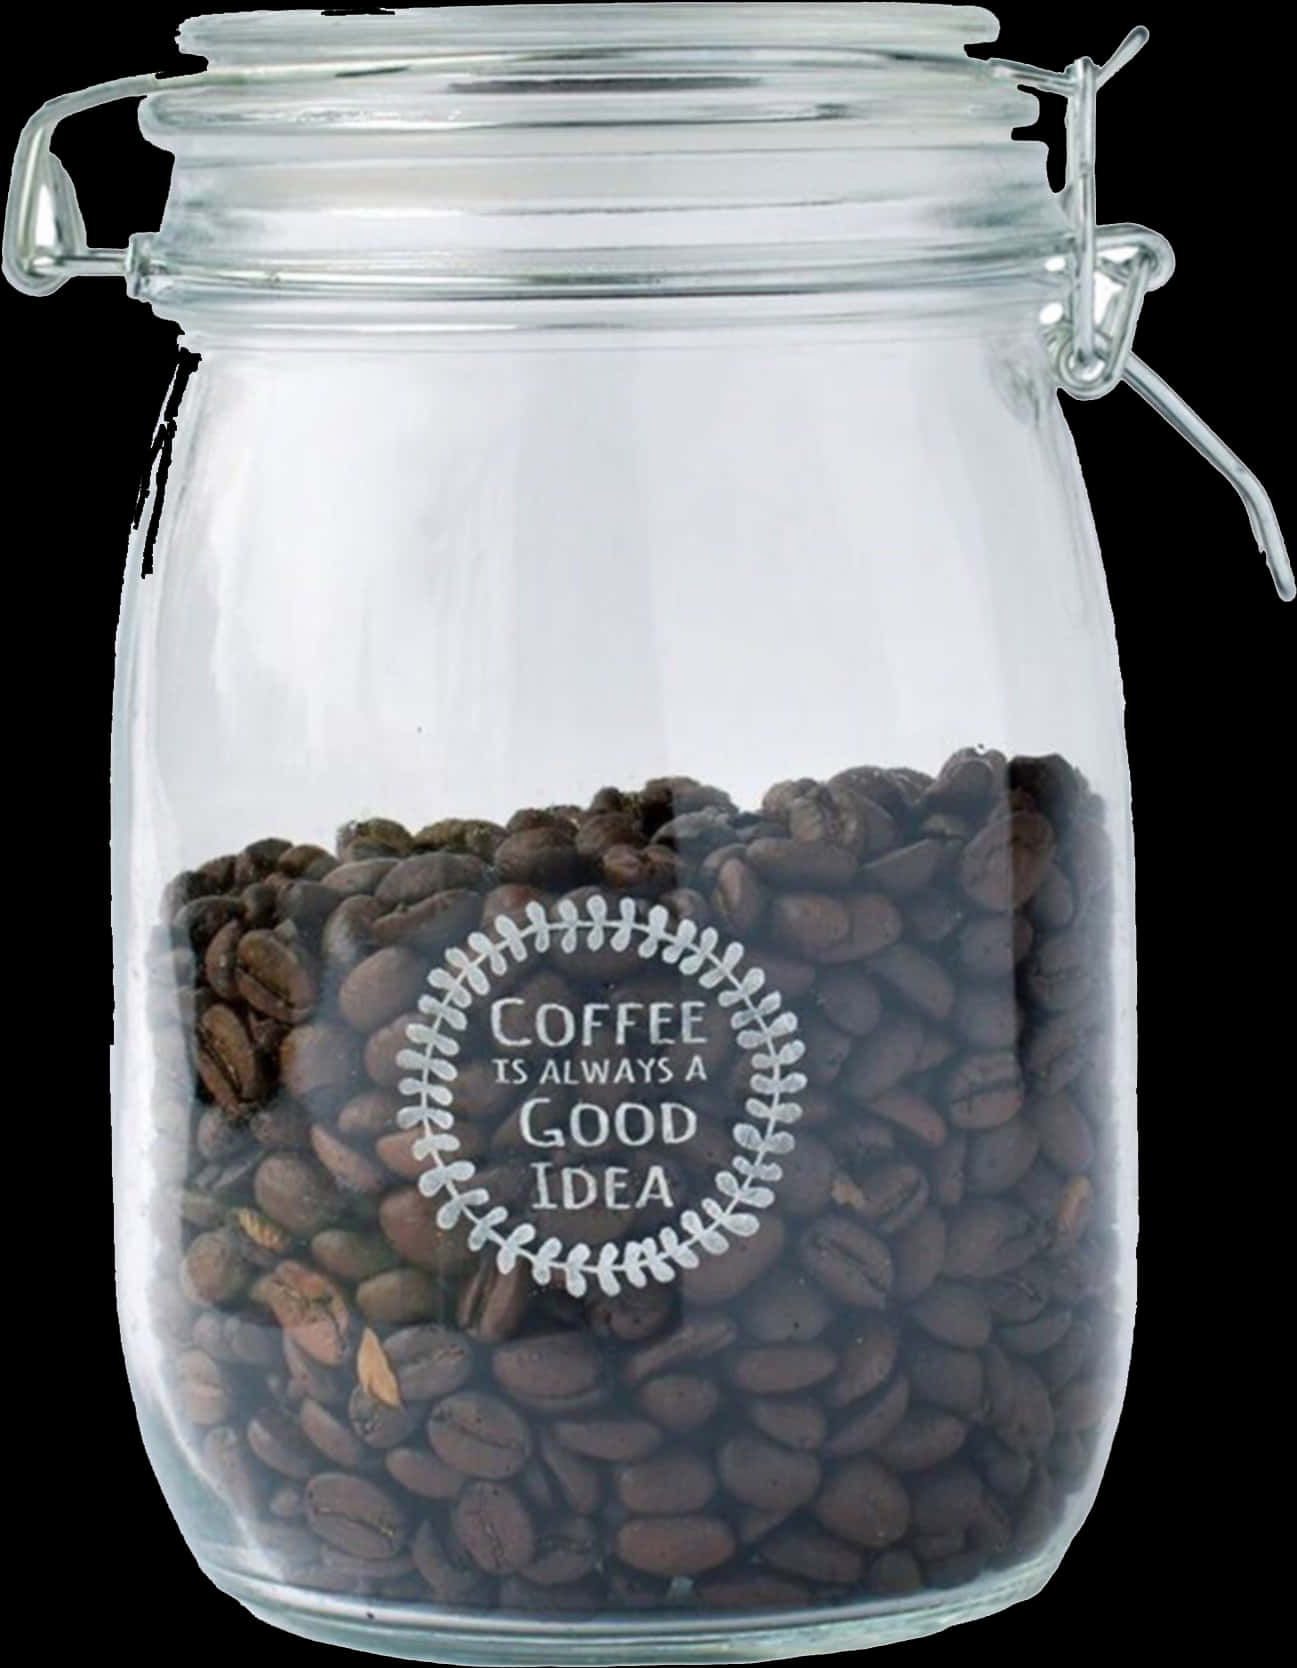 Coffee Beansin Glass Jar